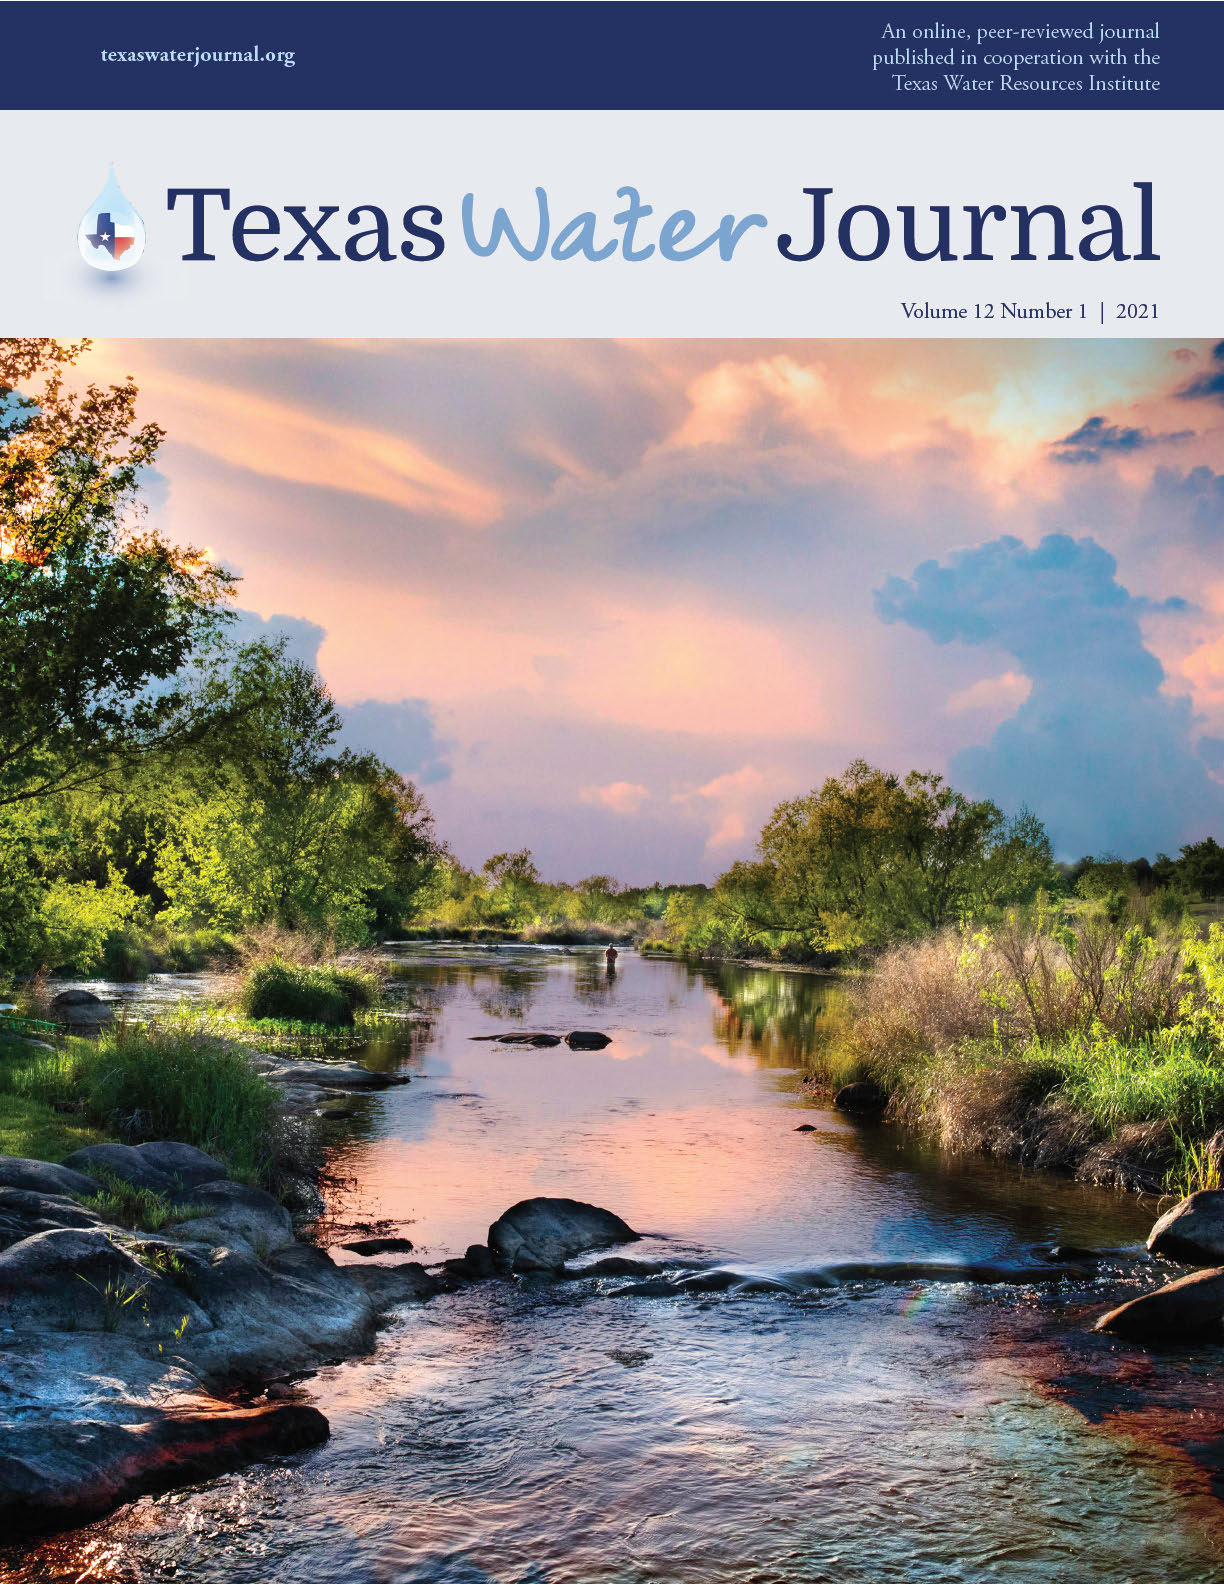 Texas Water Journal cover photo: Llano River with fisherman. ©2018 Ray Uherek.